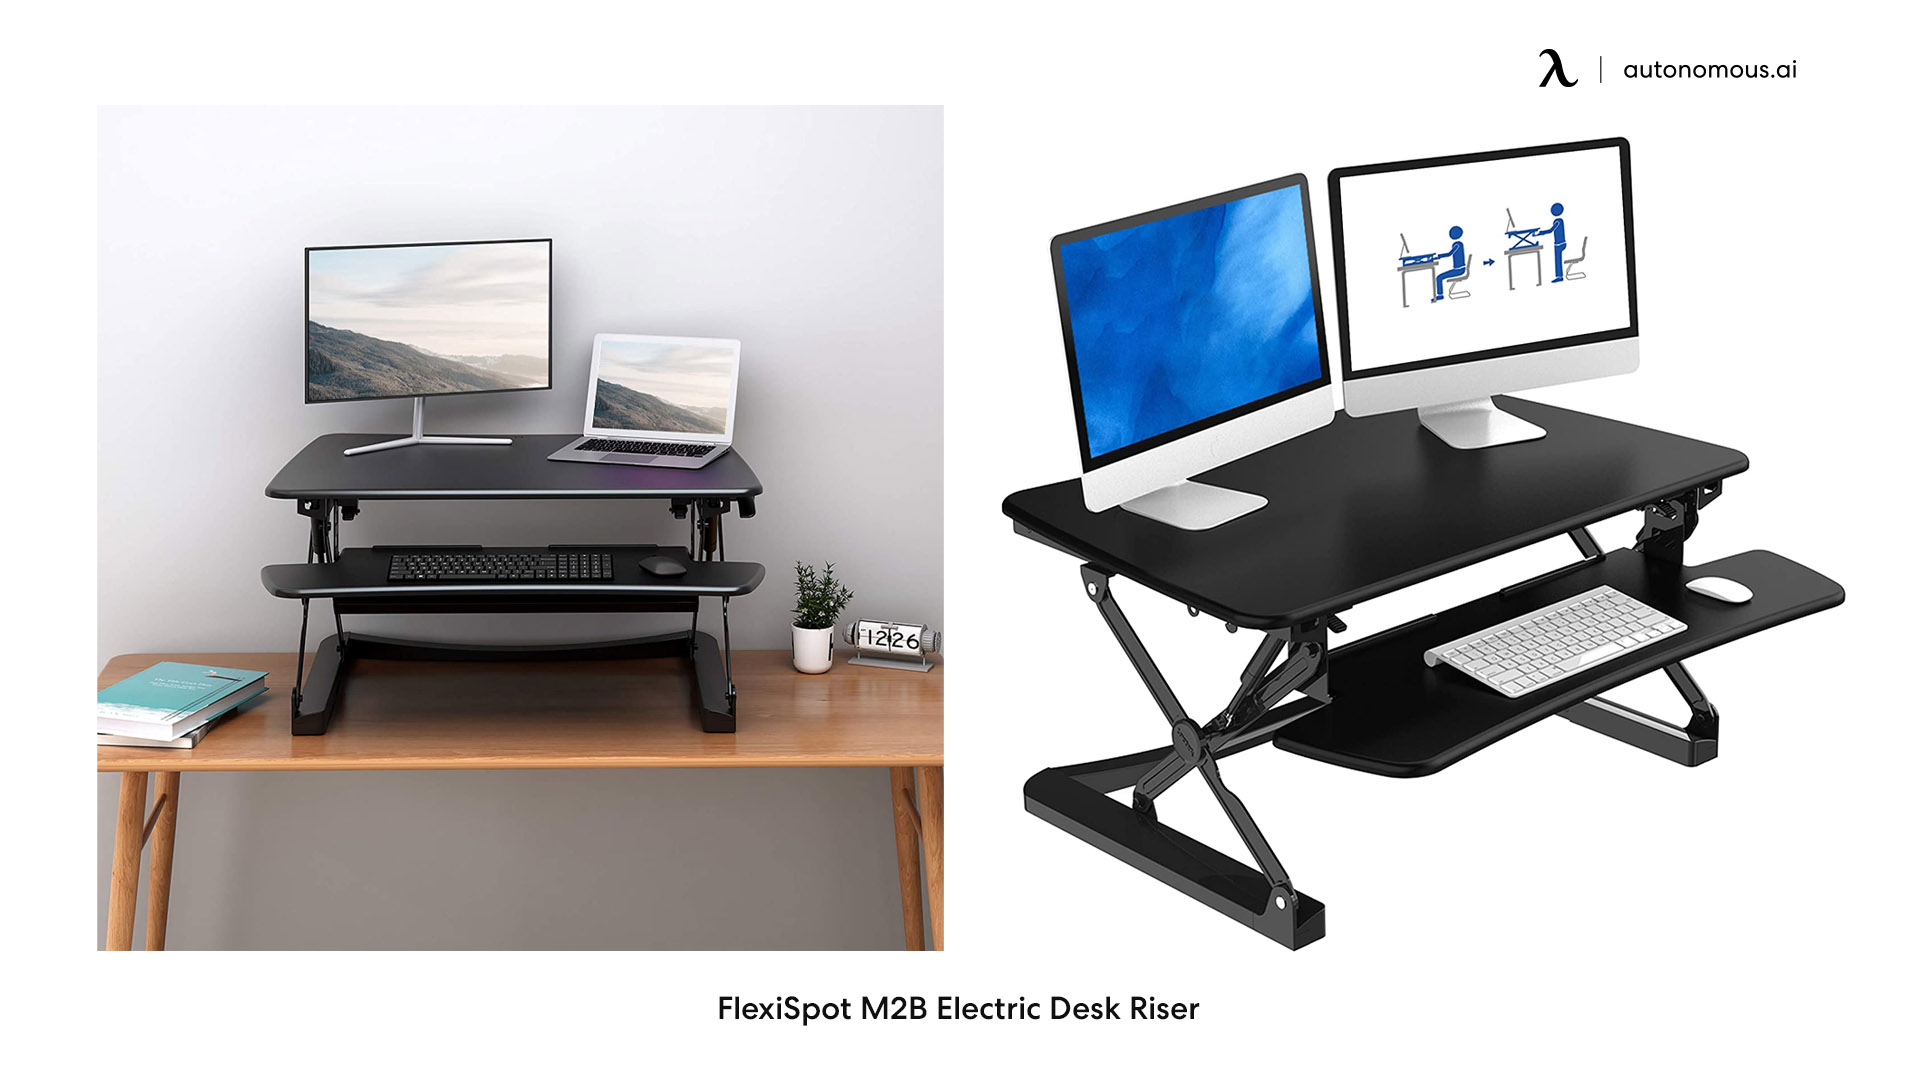 FlexiSpot M2B Electric Desk Riser